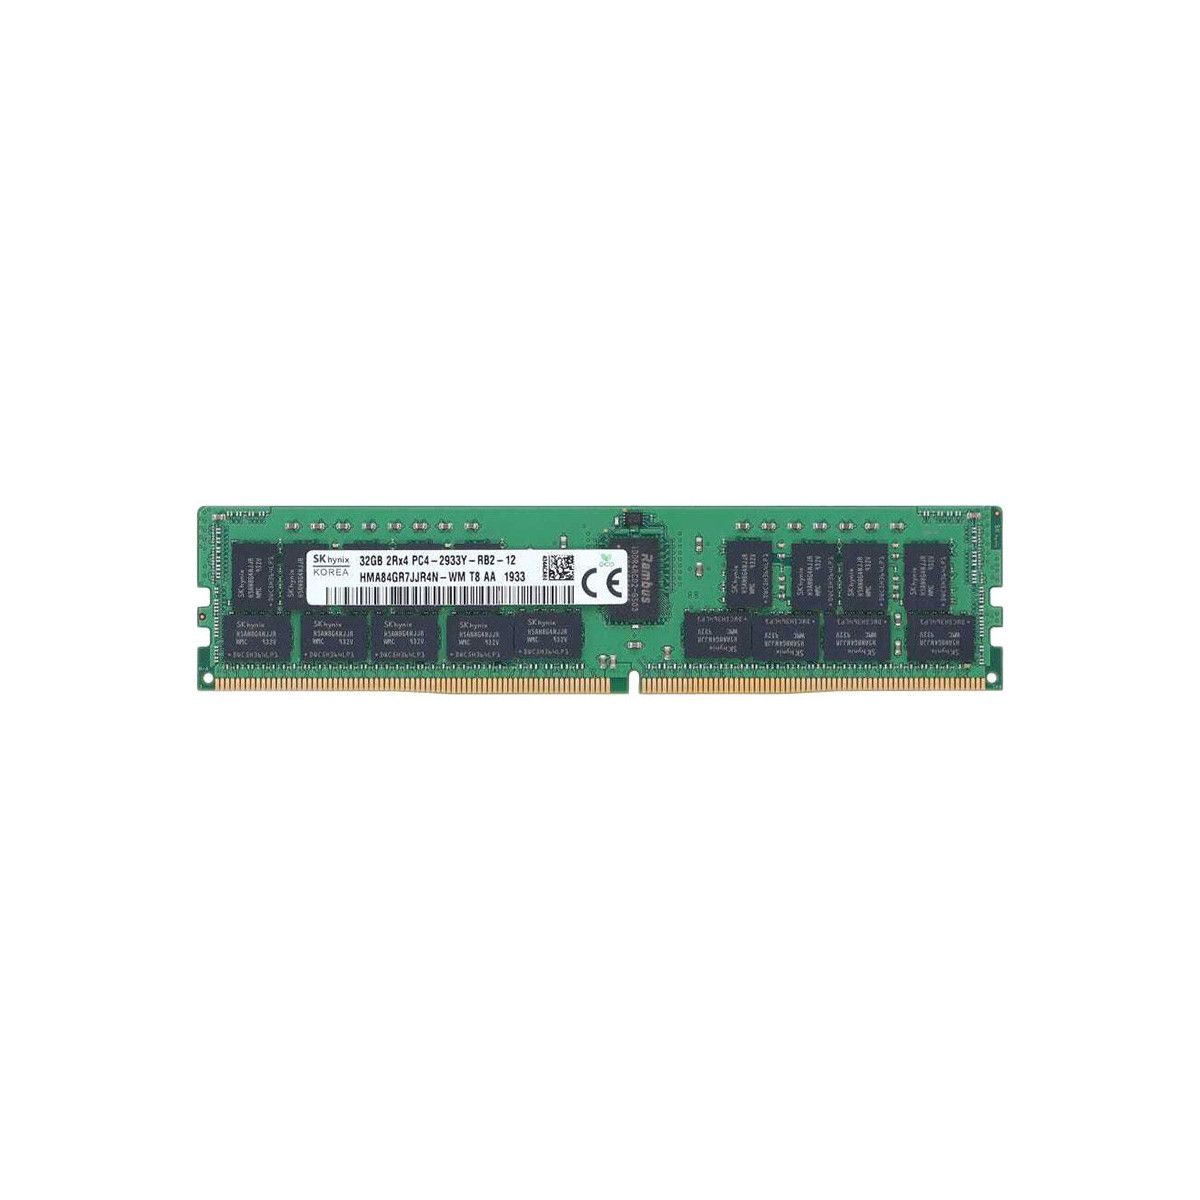 HX-MR-X32G2RT-H-MS - Memstar 1x 32GB DDR4-2933 RDIMM PC4-23466U-R - Mem-Star OEM compatibile Memoria 1 - Memstar 